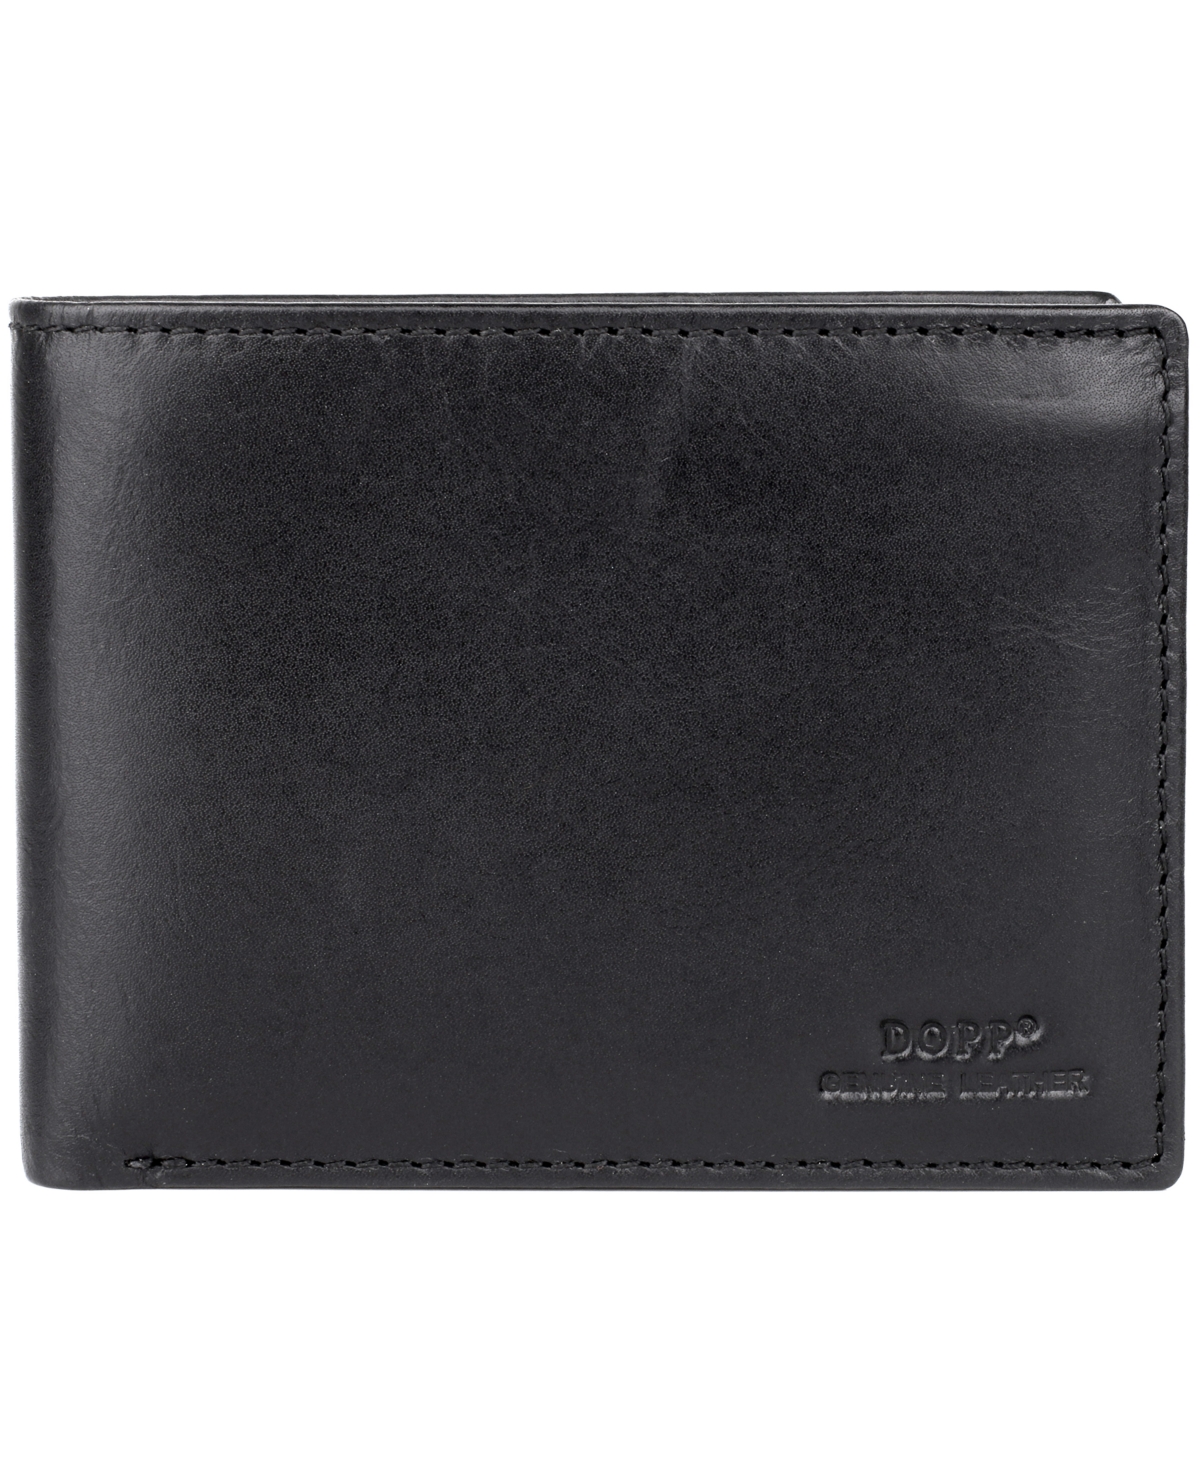 Dopp Regatta Convertible Thinfold Wallet In Black